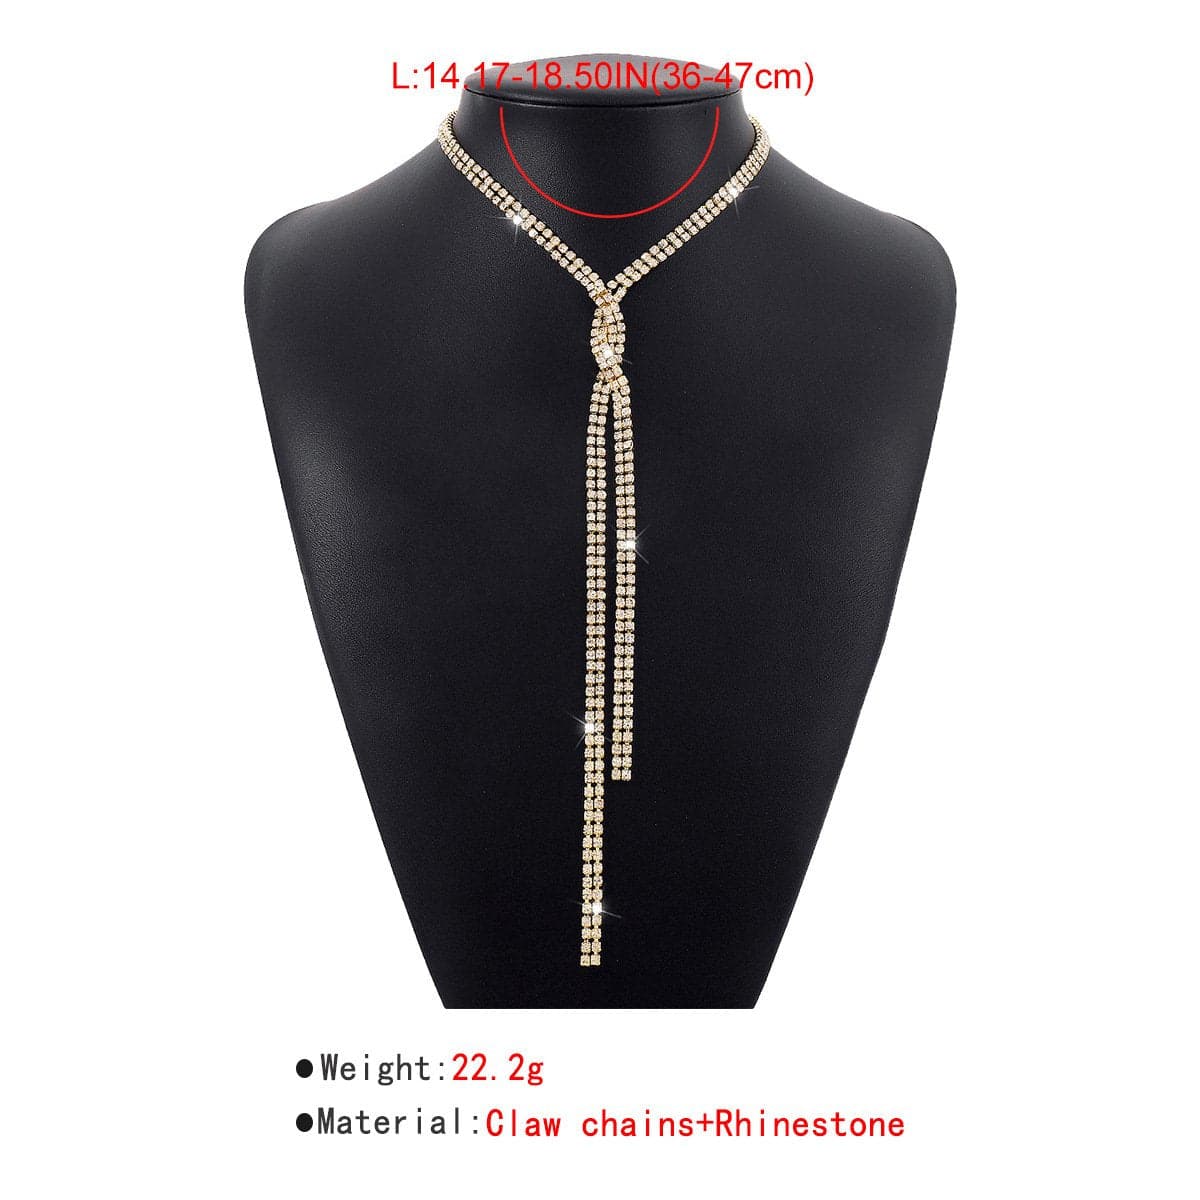 Knotted rhinestone choker necklace